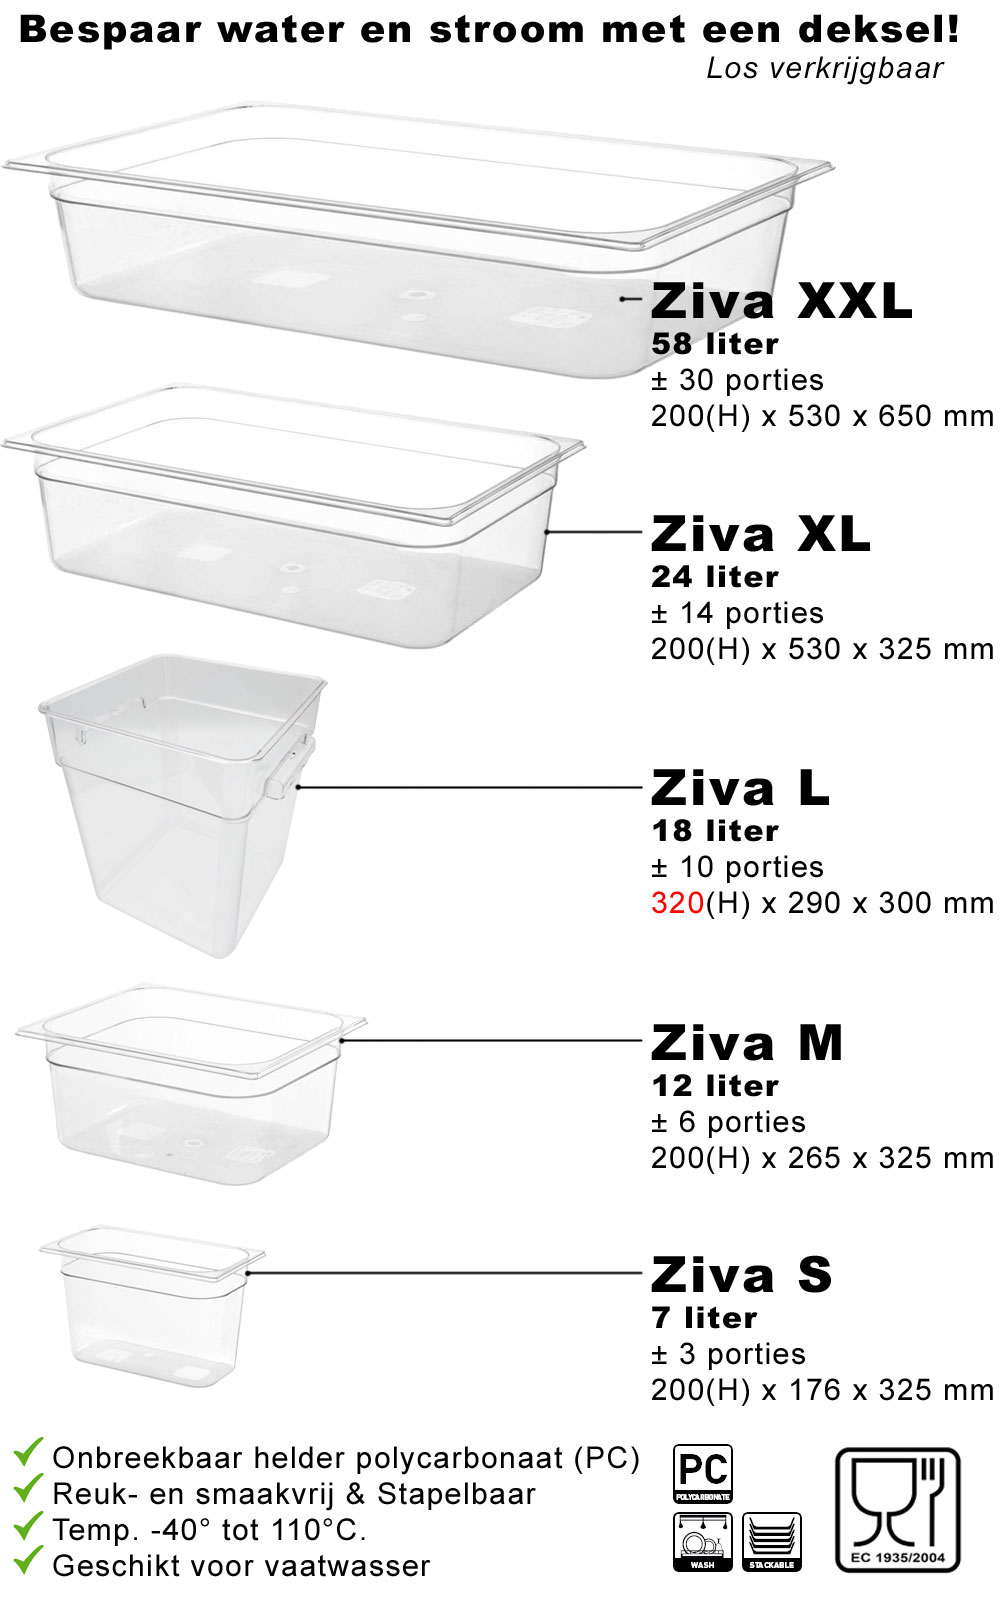 Ziva Sense + Ziva SlimTouch + 12 liter bundle